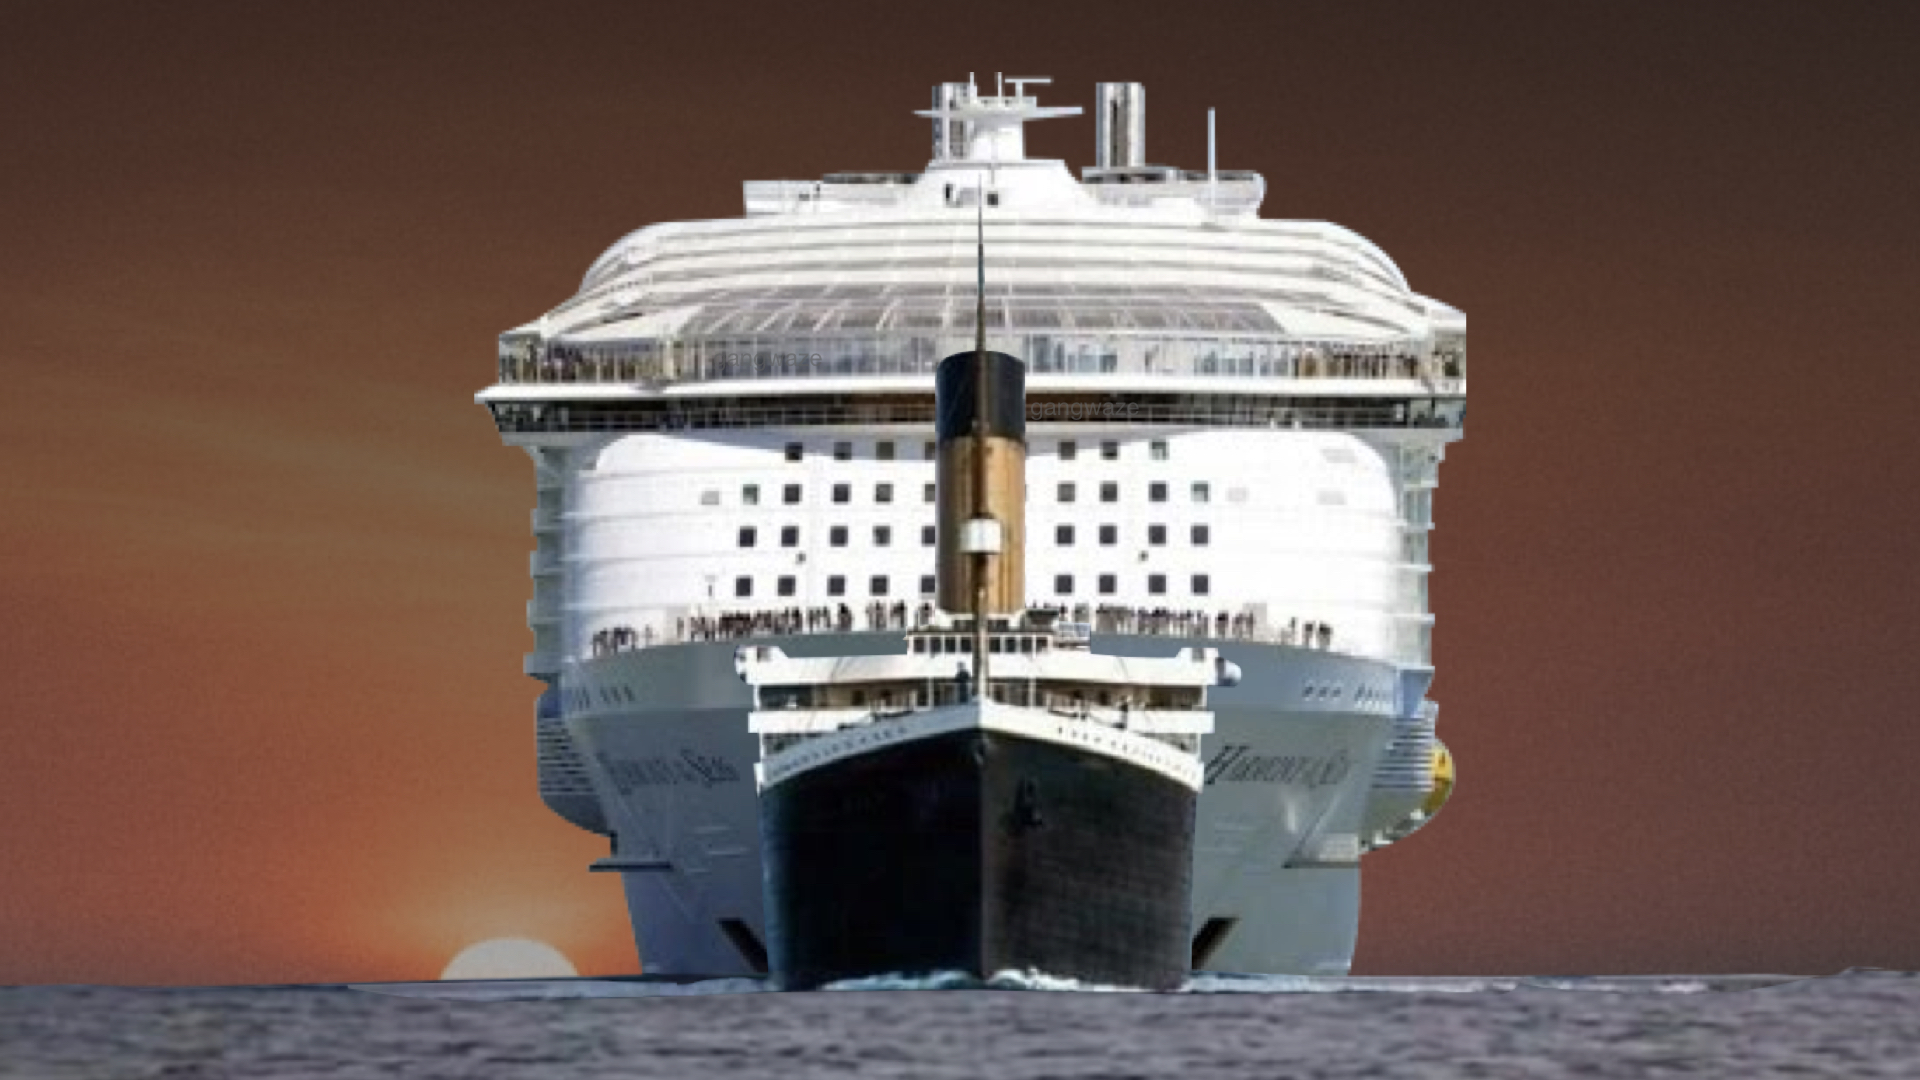 Ota selvää 48+ imagen titanic size compared to cruise ships today